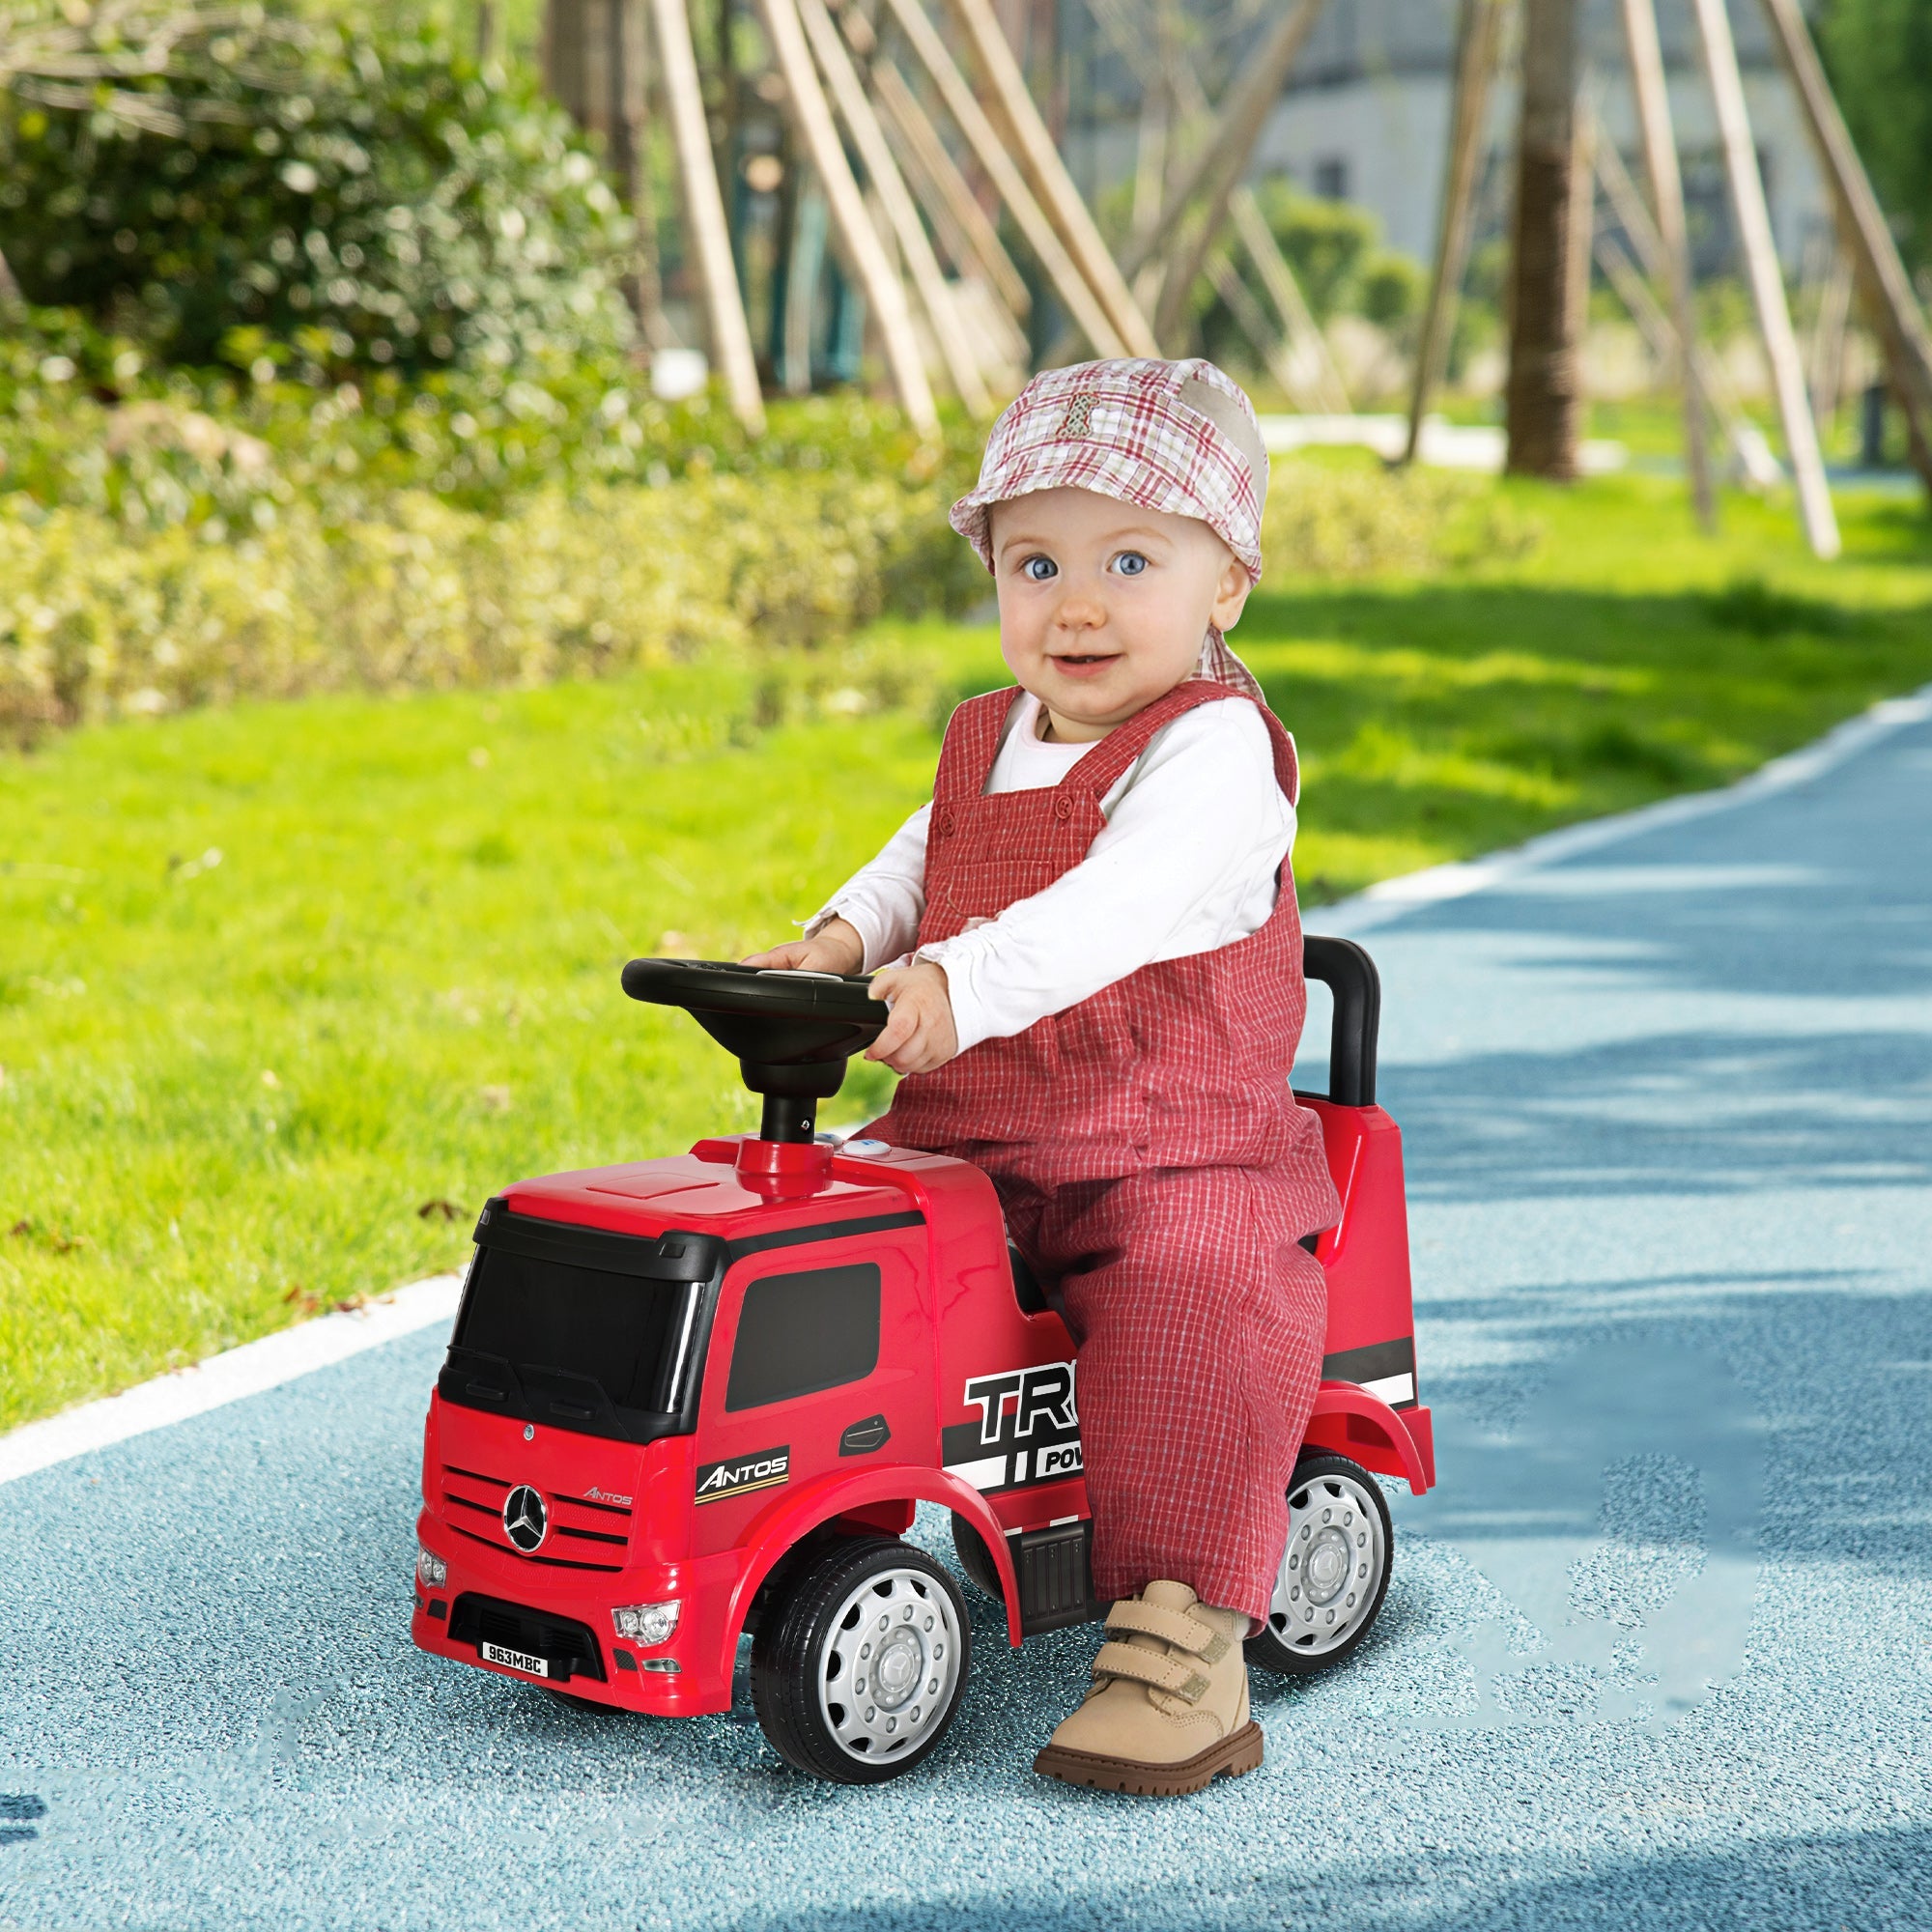 3-in-1 Ride On Car Licensed Mercedes-Benz Truck Stroller Toddler Under Seat Storage Handle Steering Wheel Horn for Baby 12 - 36 Months Red-1